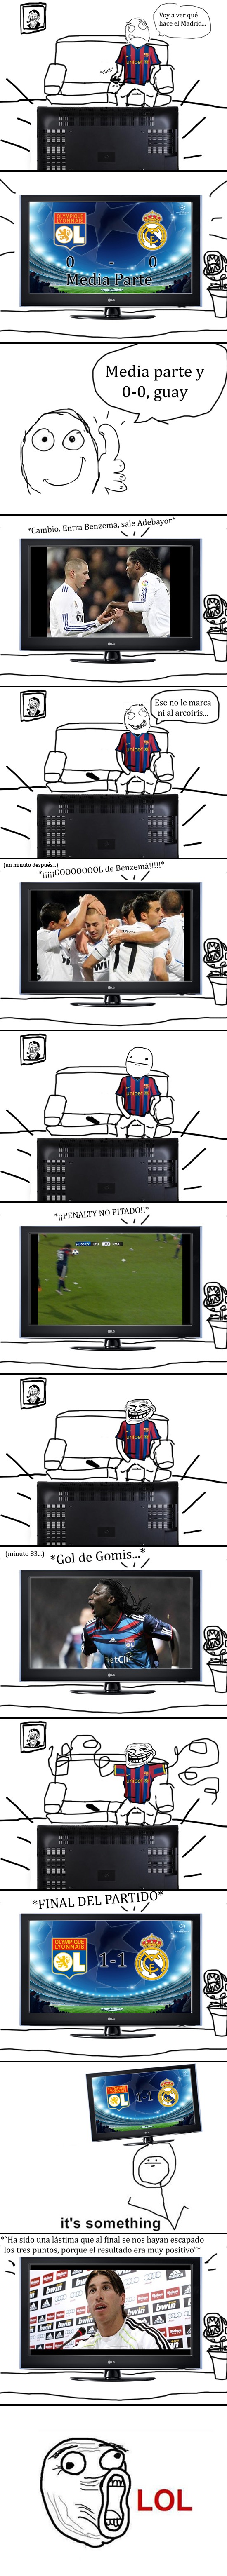 Mix - Olympique Lyon vs Real Madrid